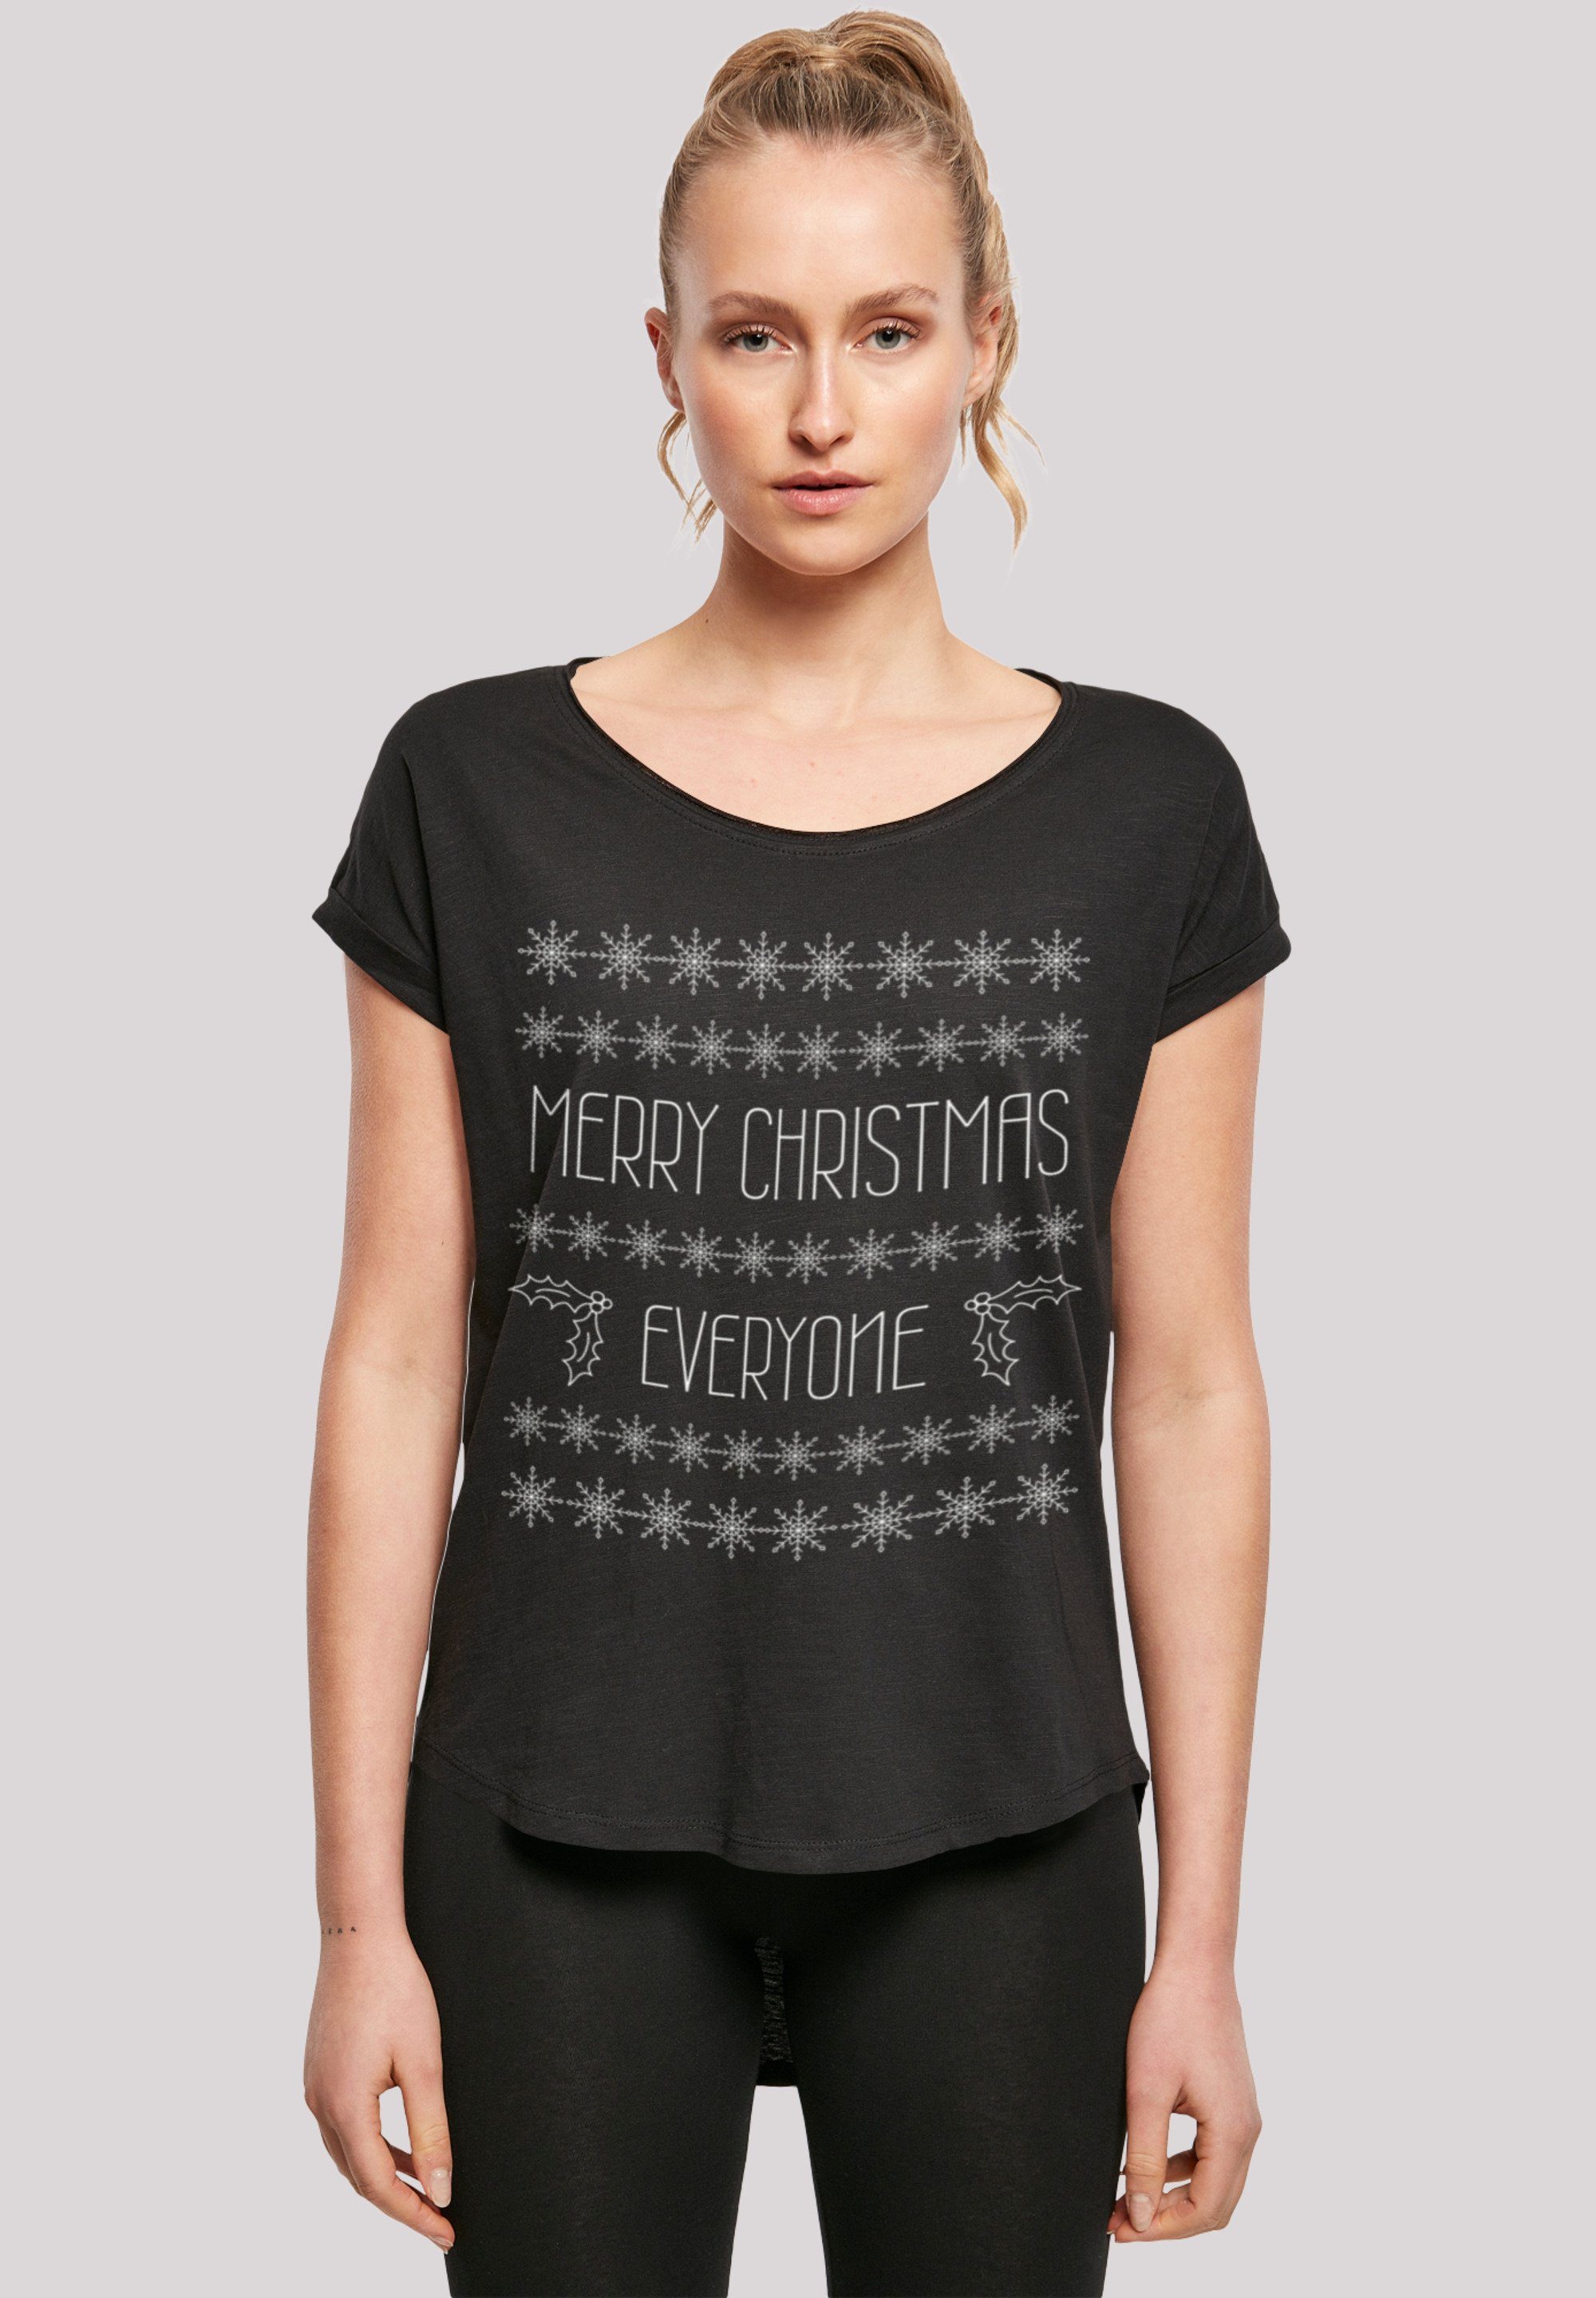 F4NT4STIC T-Shirt Merry schwarz Print Christmas Weihnachten Everyone